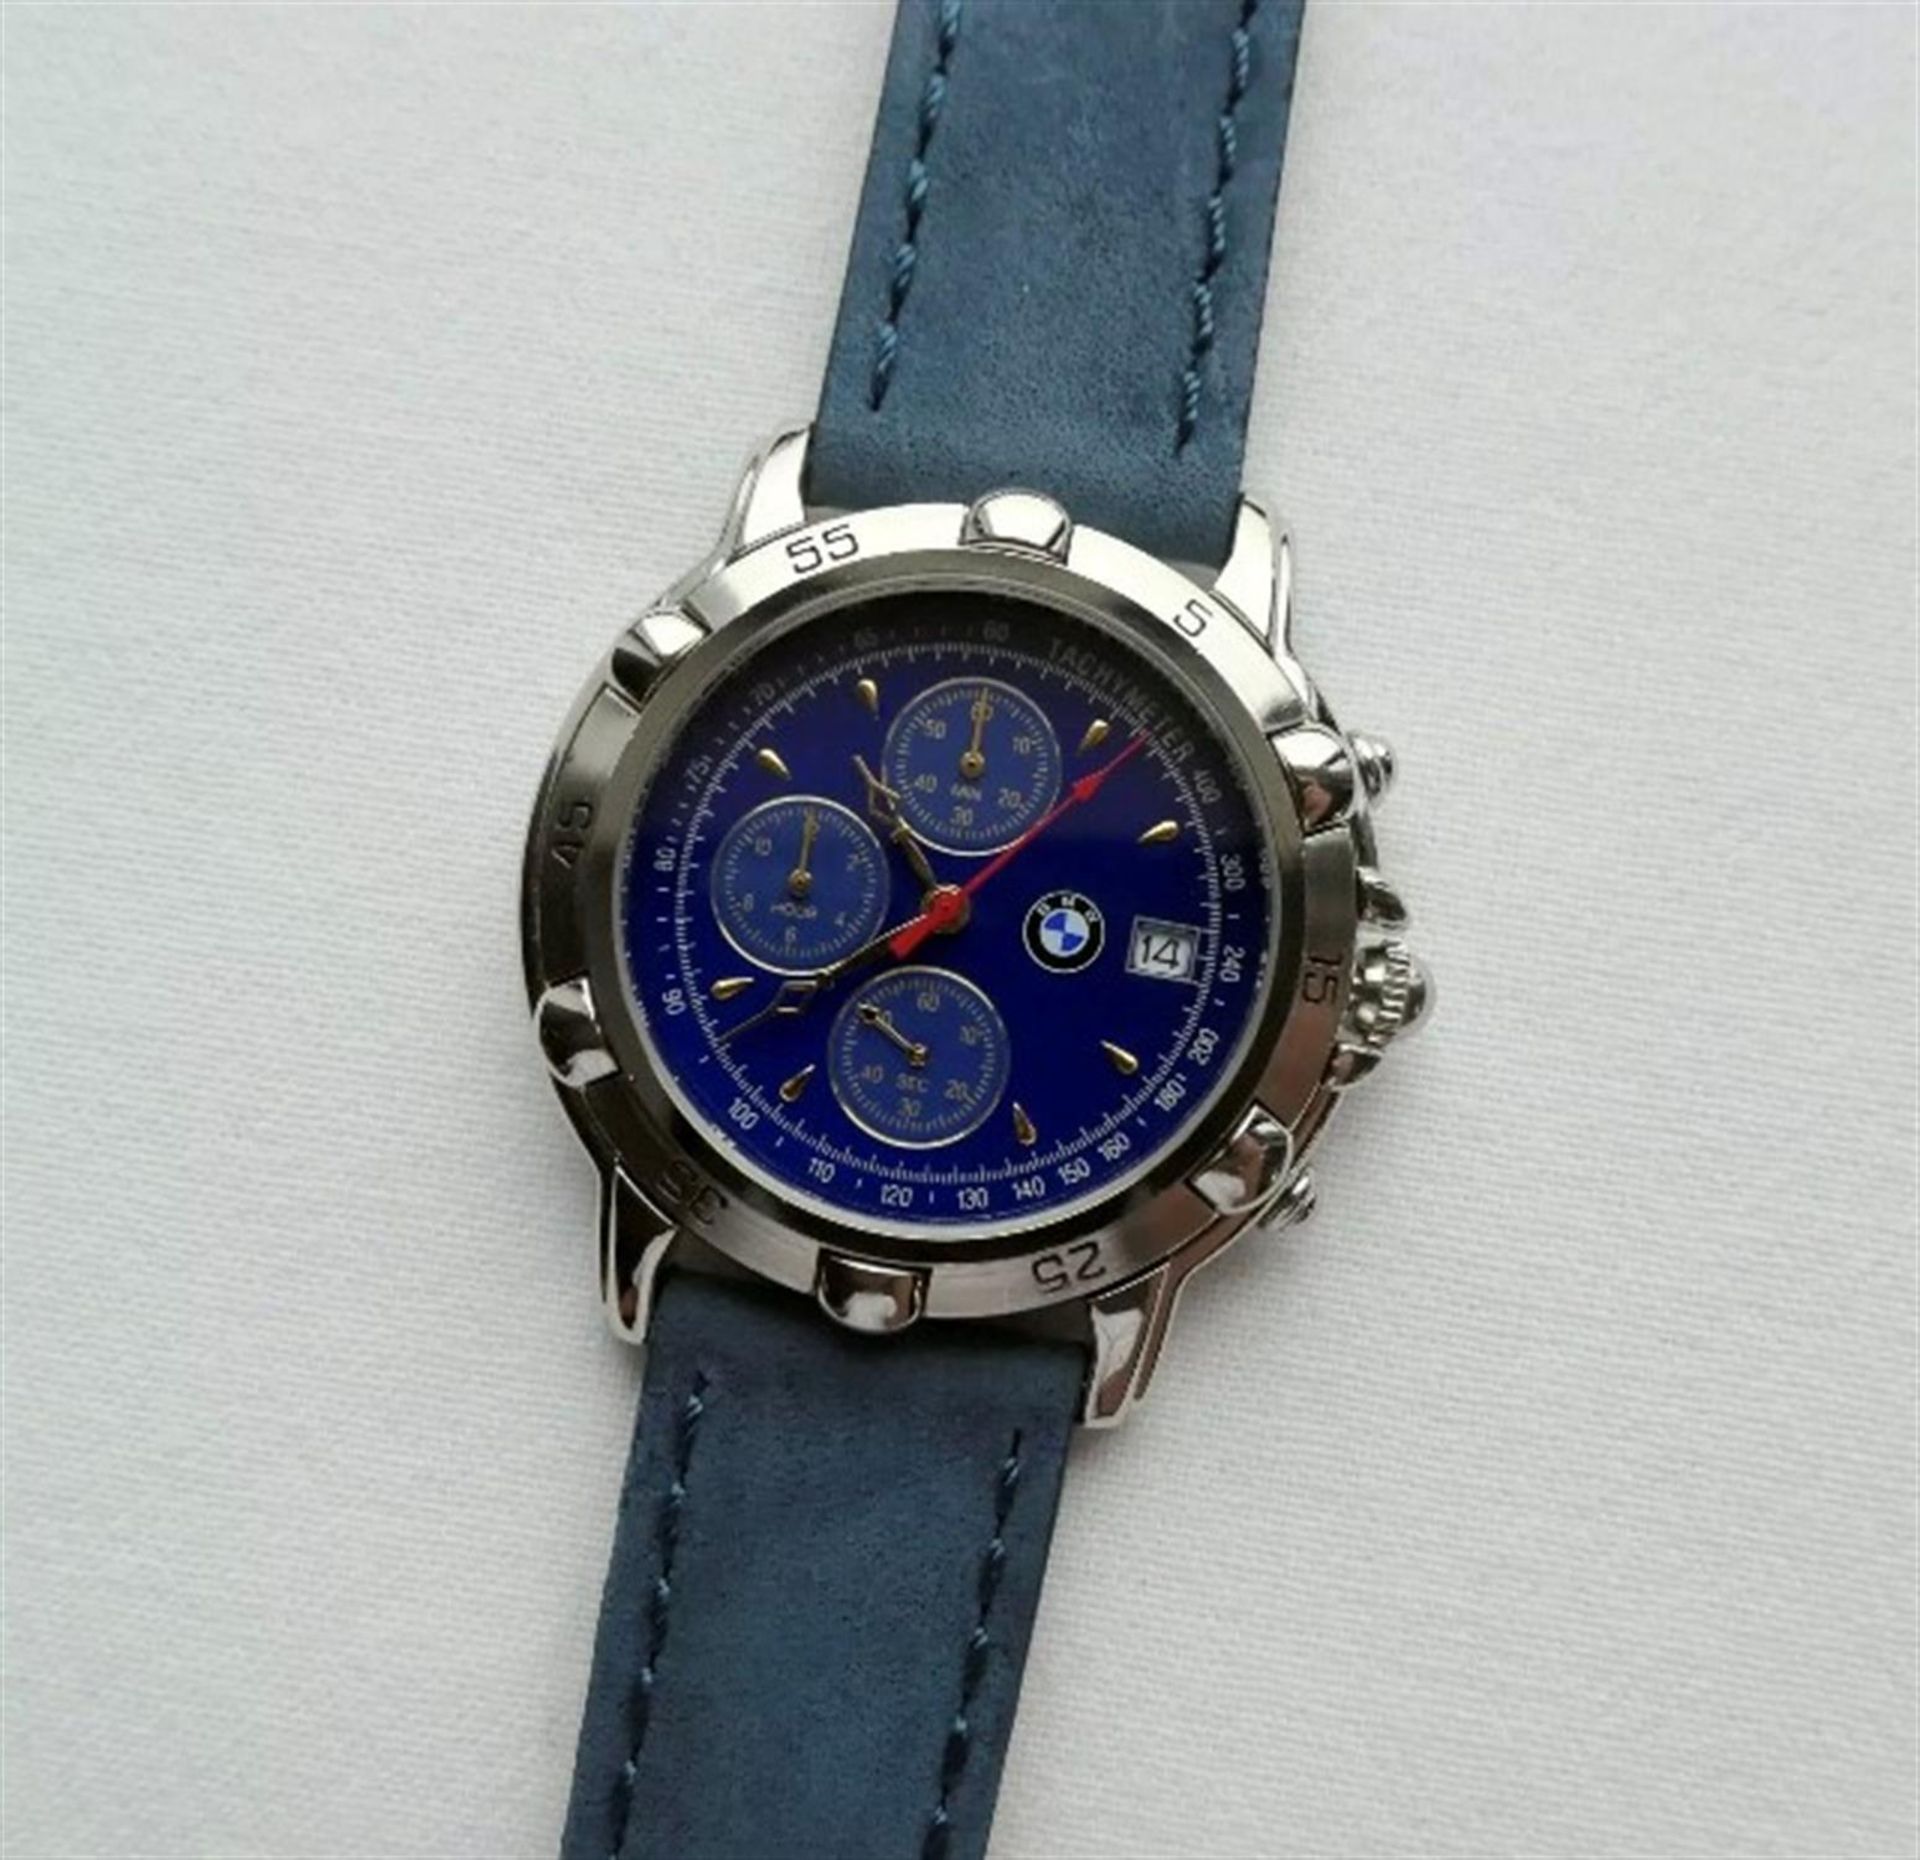 A Genuine And Rare BMW Chronograph Gentleman's Wrist Watch, C1990s. - Image 5 of 10